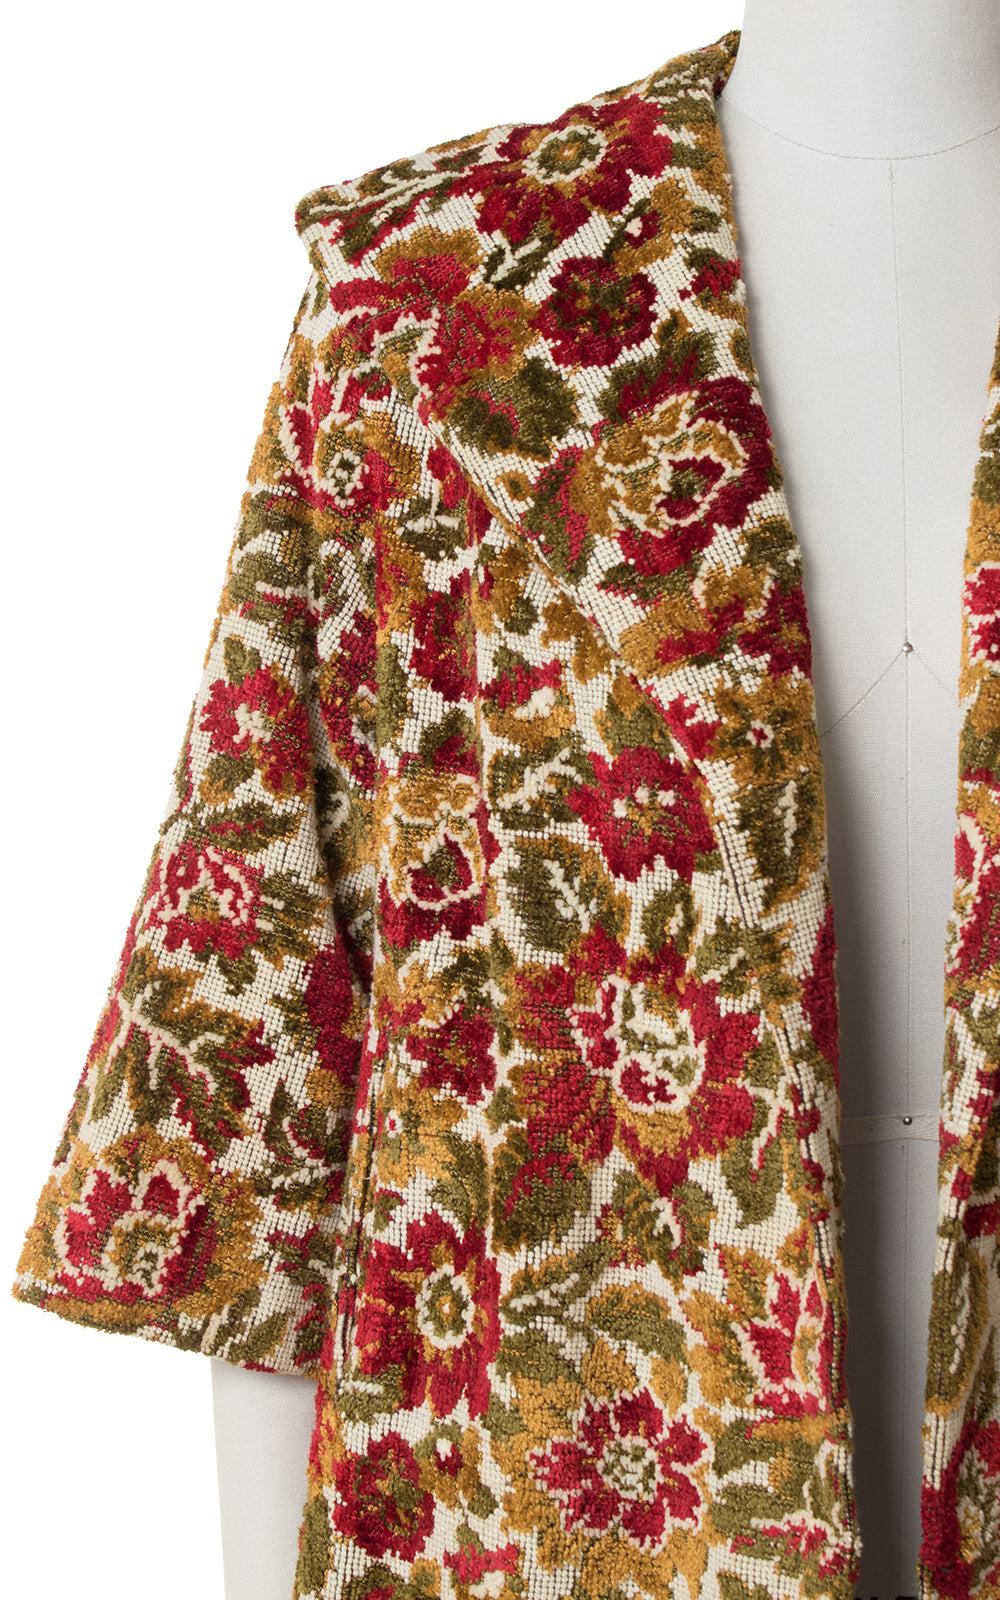 1960s Floral Tapestry Swing Coat | small/medium